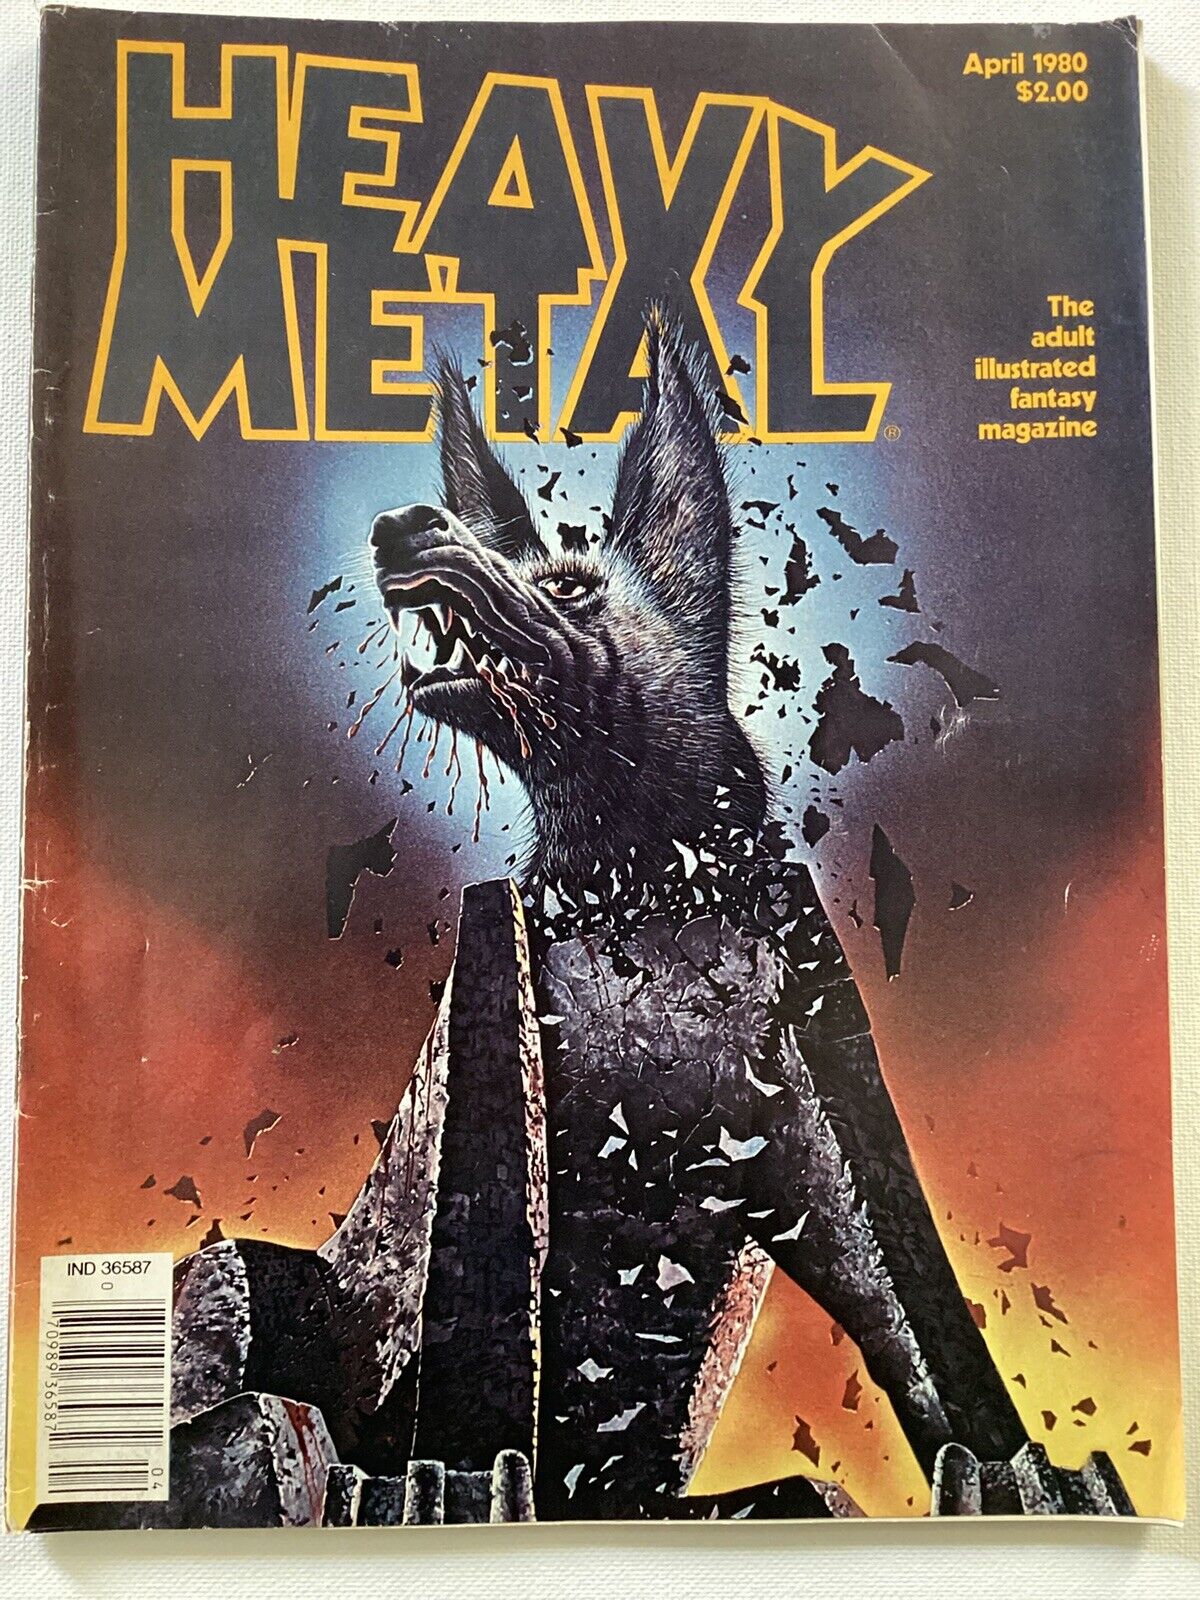 Heavy Metal - April 1980 - Adult Illustrated Fantasy Magazine